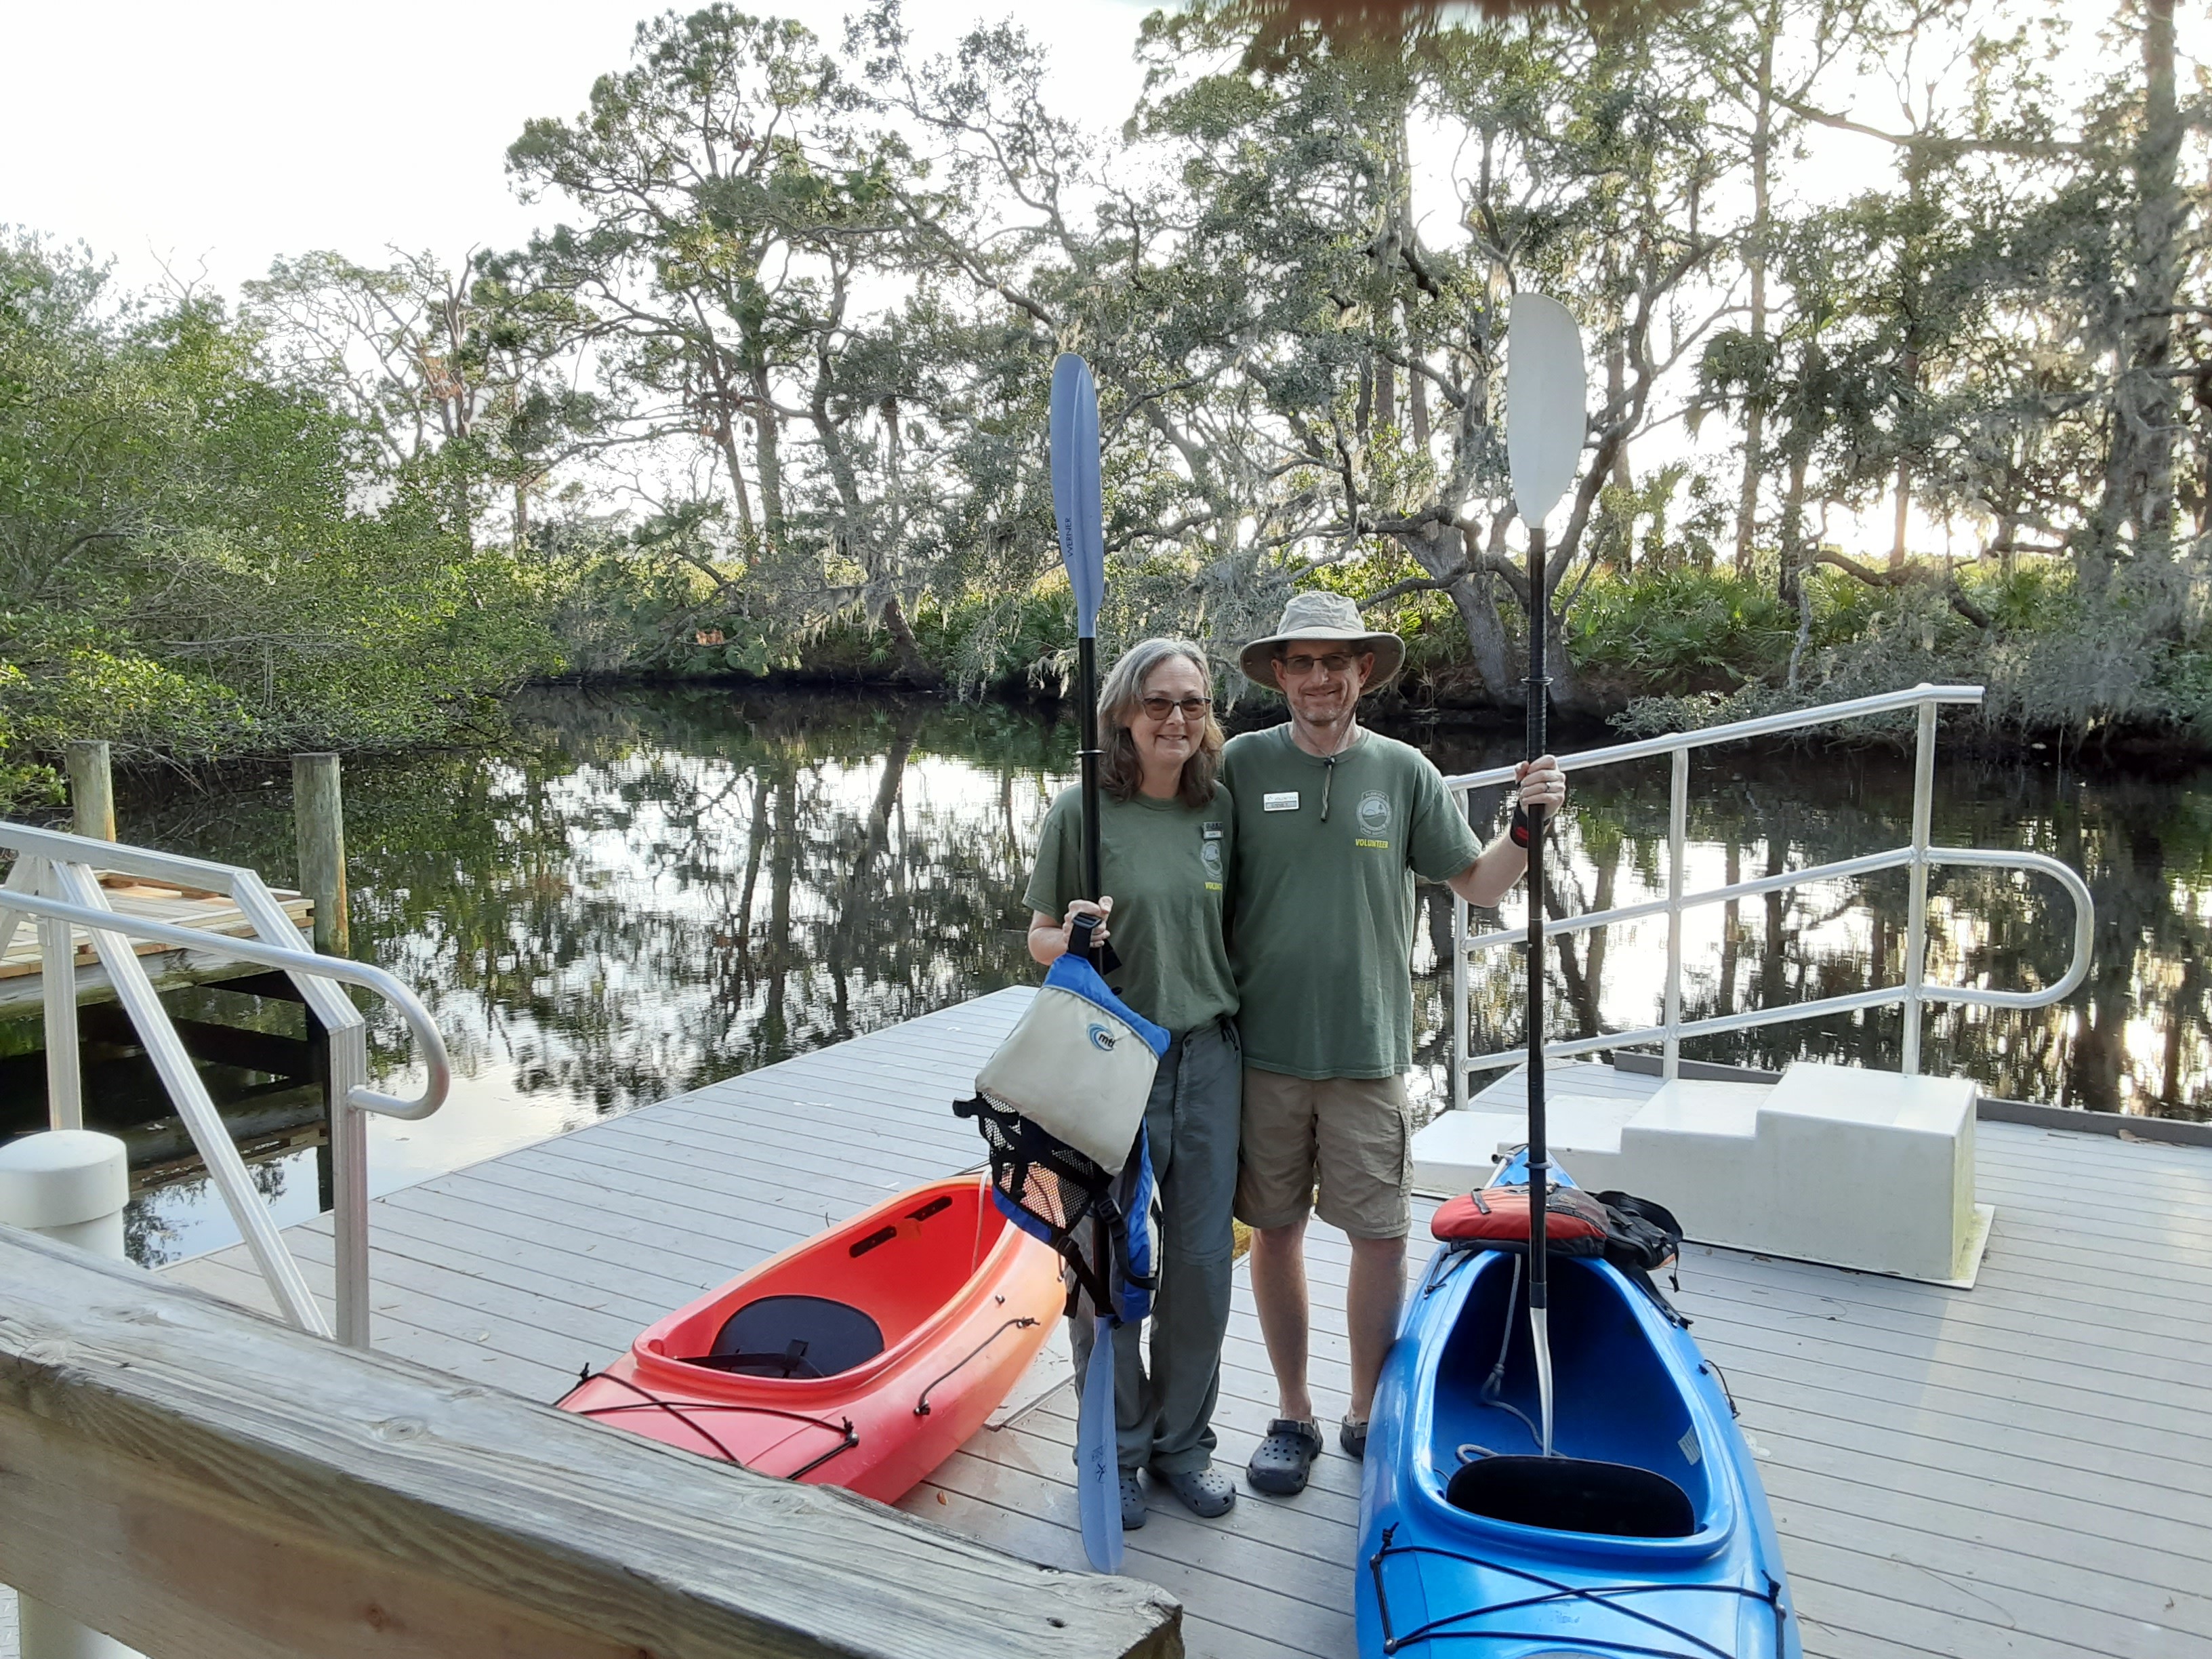 Steve and Lana Turner prepare for a paddle event at Oscar Scherer State Park.